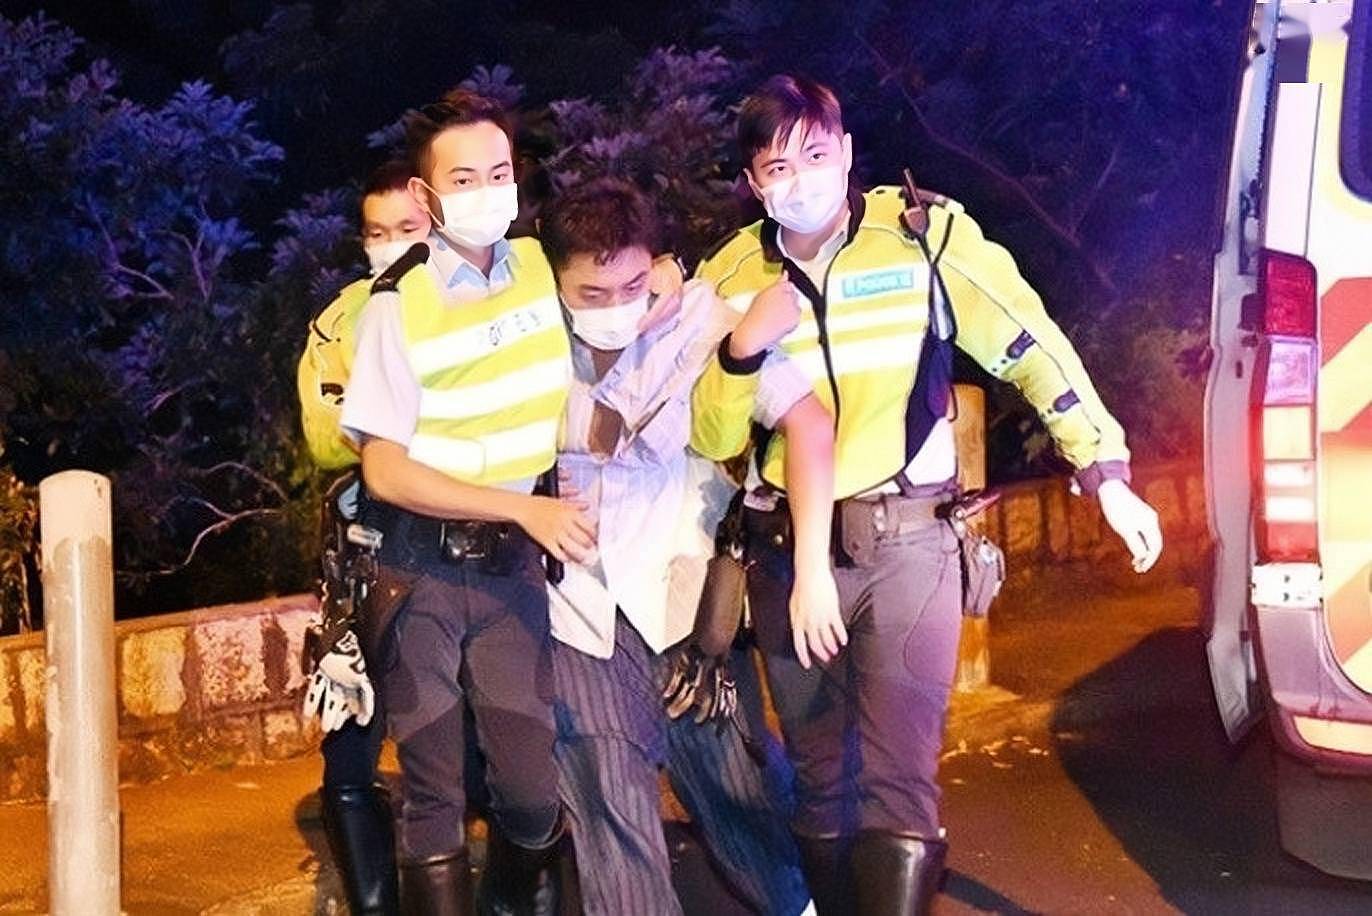 TVB男星不小心驾驶罪成立，被判监禁18天停牌两年，女友哭成泪人 - 2